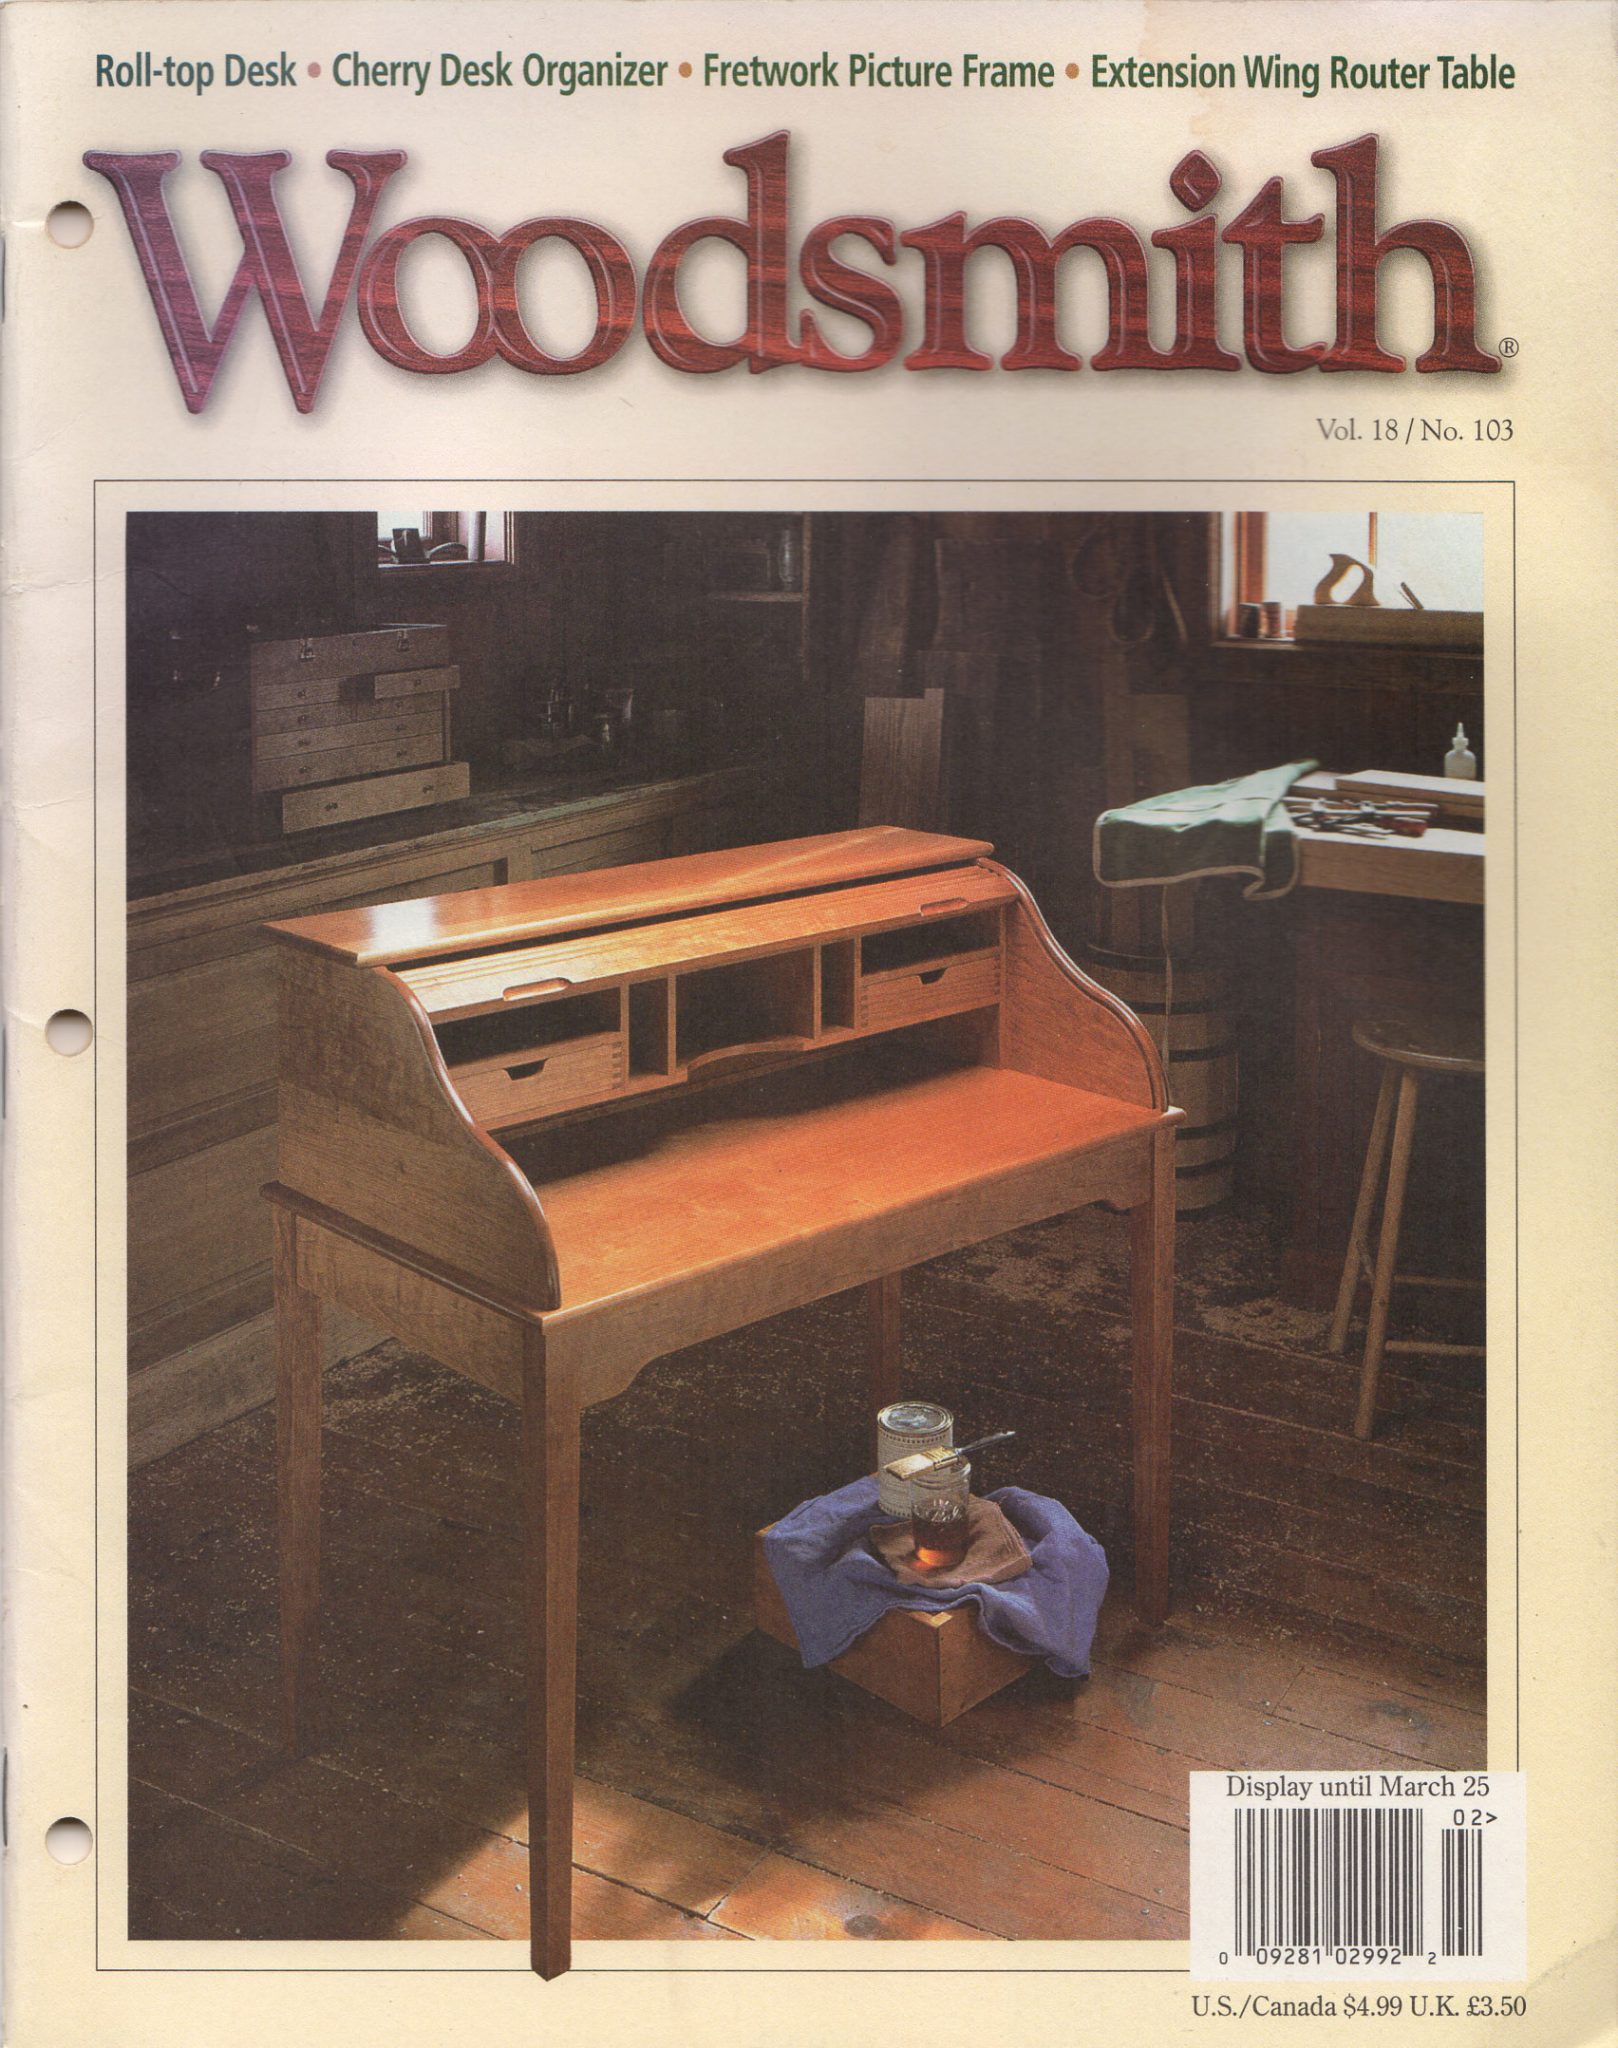 Woodsmith Vol 18 No 103 Roll Top Desck Desk Organizer Frame